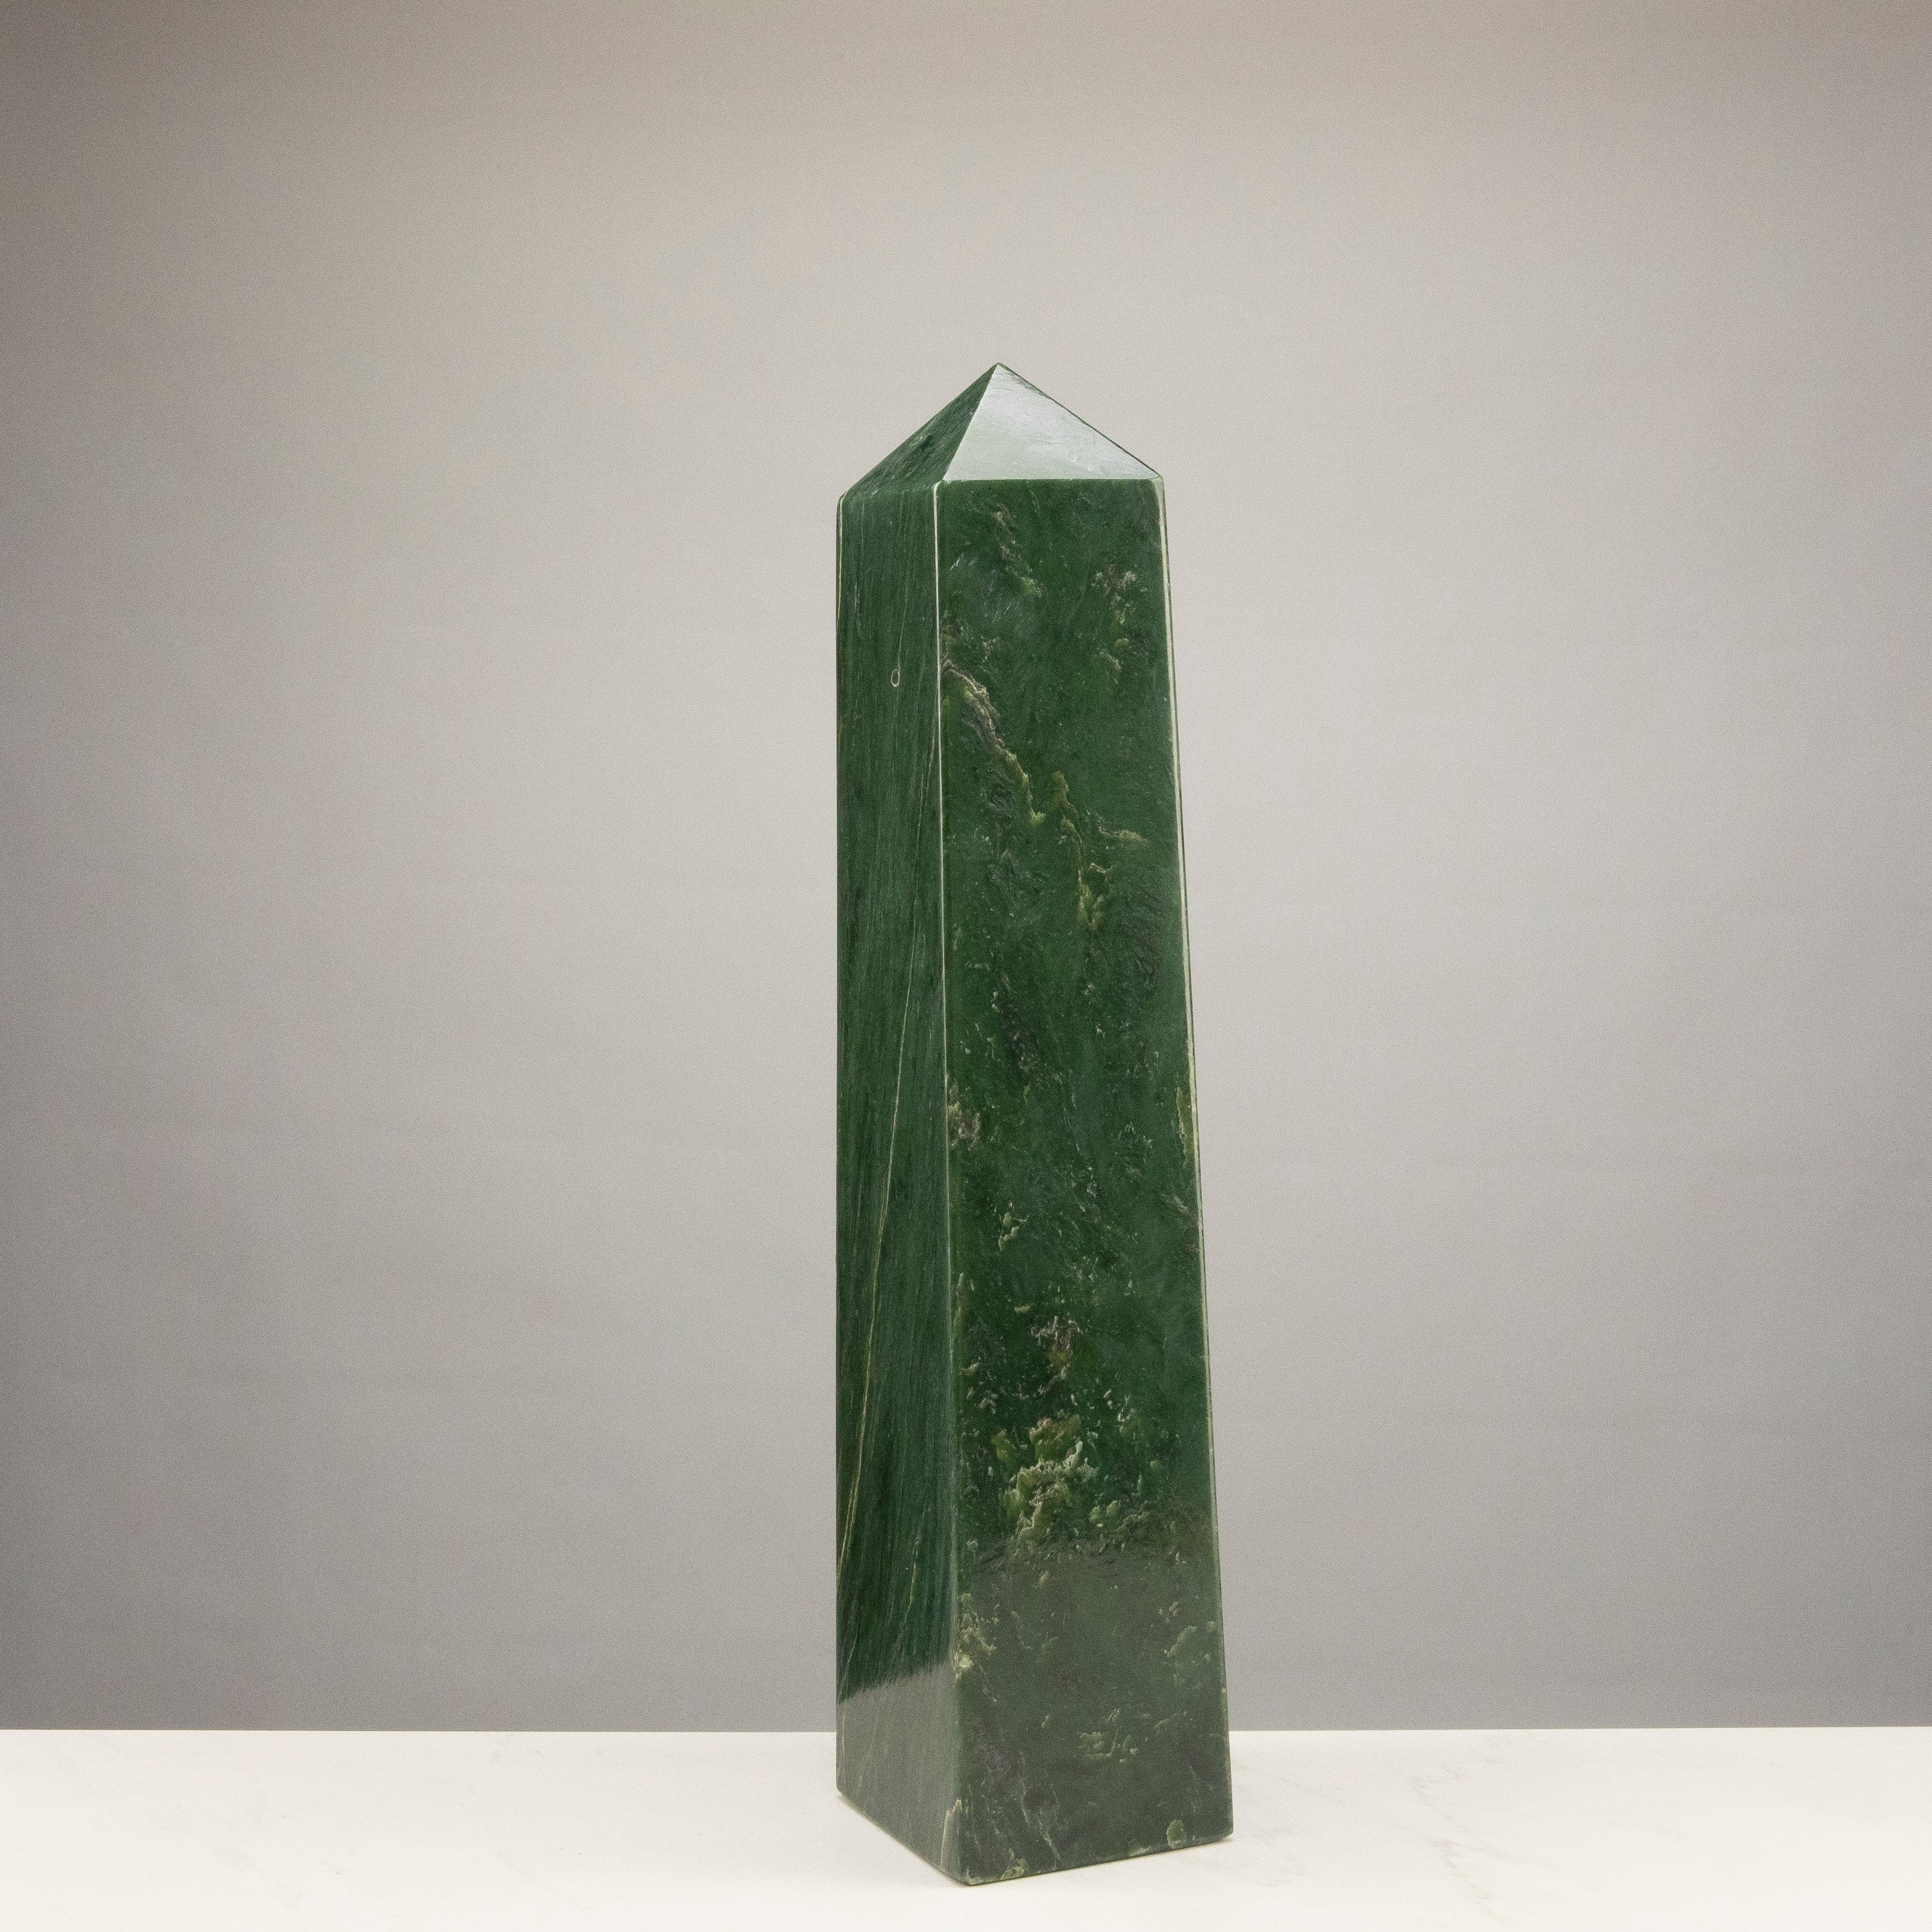 Kalifano Nephrite Jade Freeform Nephrite Jade Obelisk from Afghanistan - 24" / 49 lbs NJ17600.001